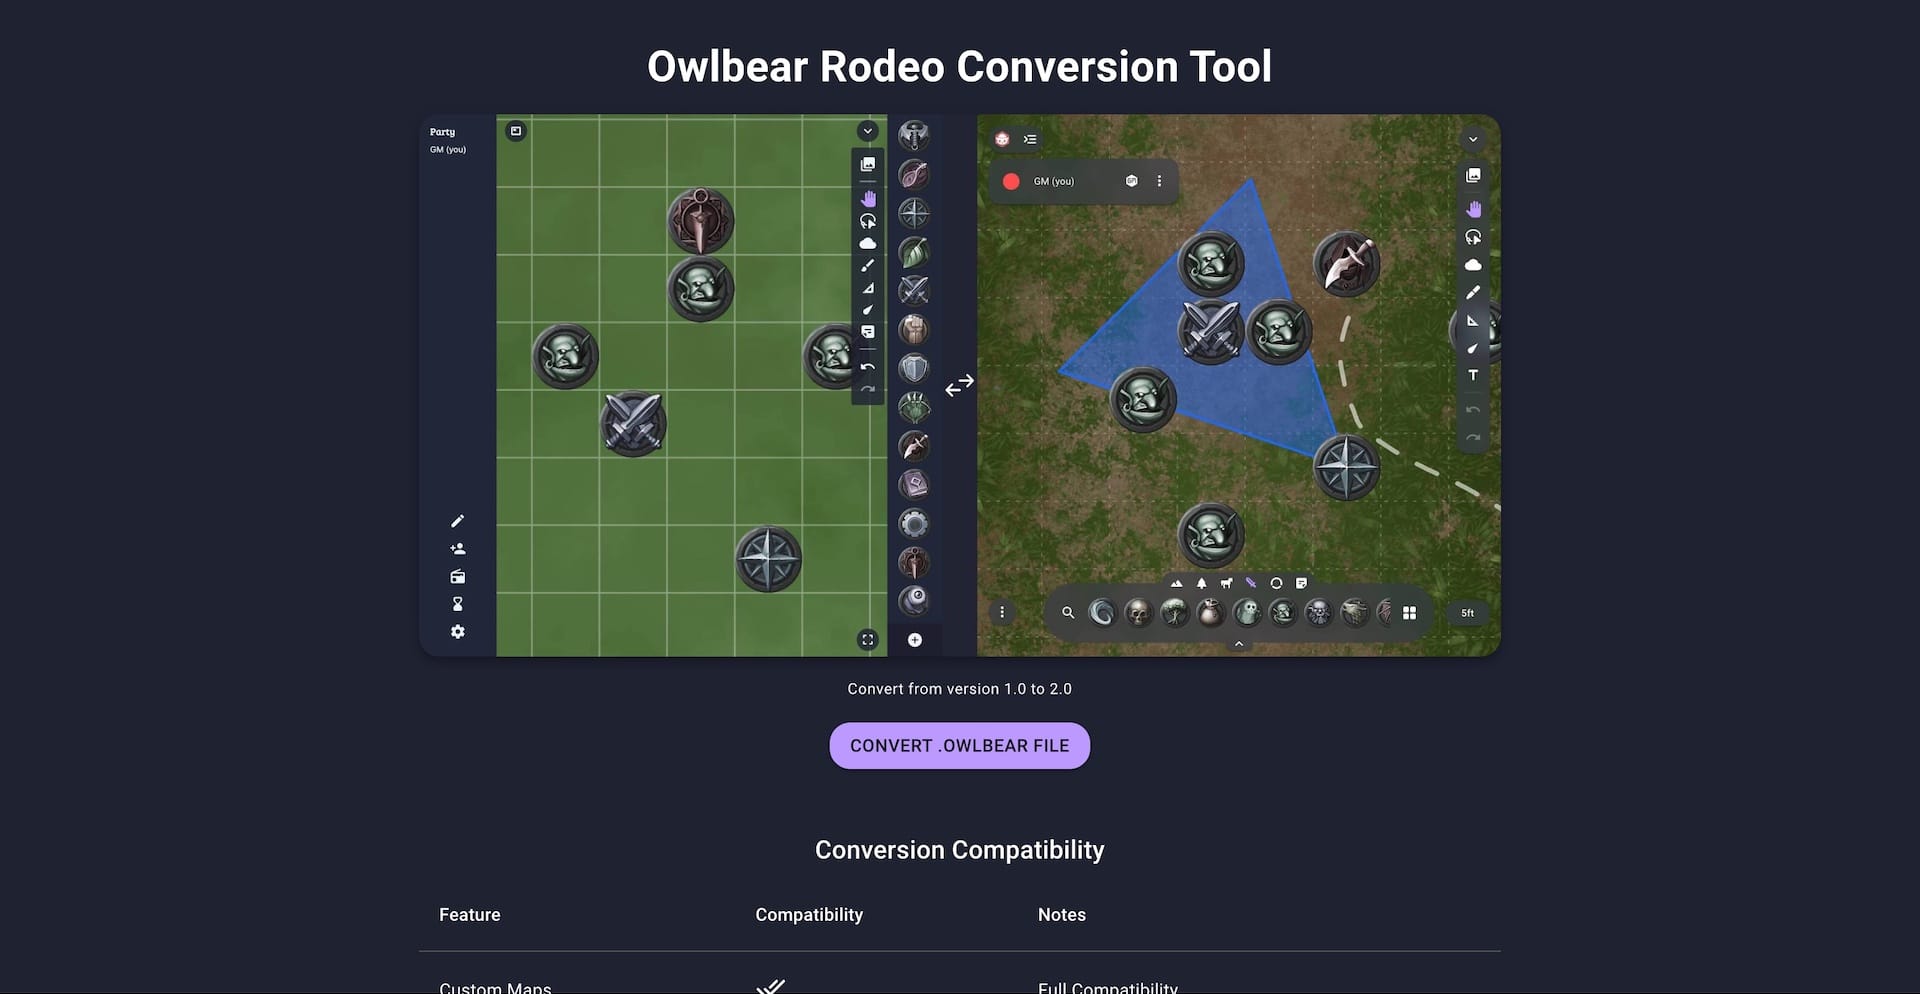 Owlbear Rodeo 2.0 conversion tool